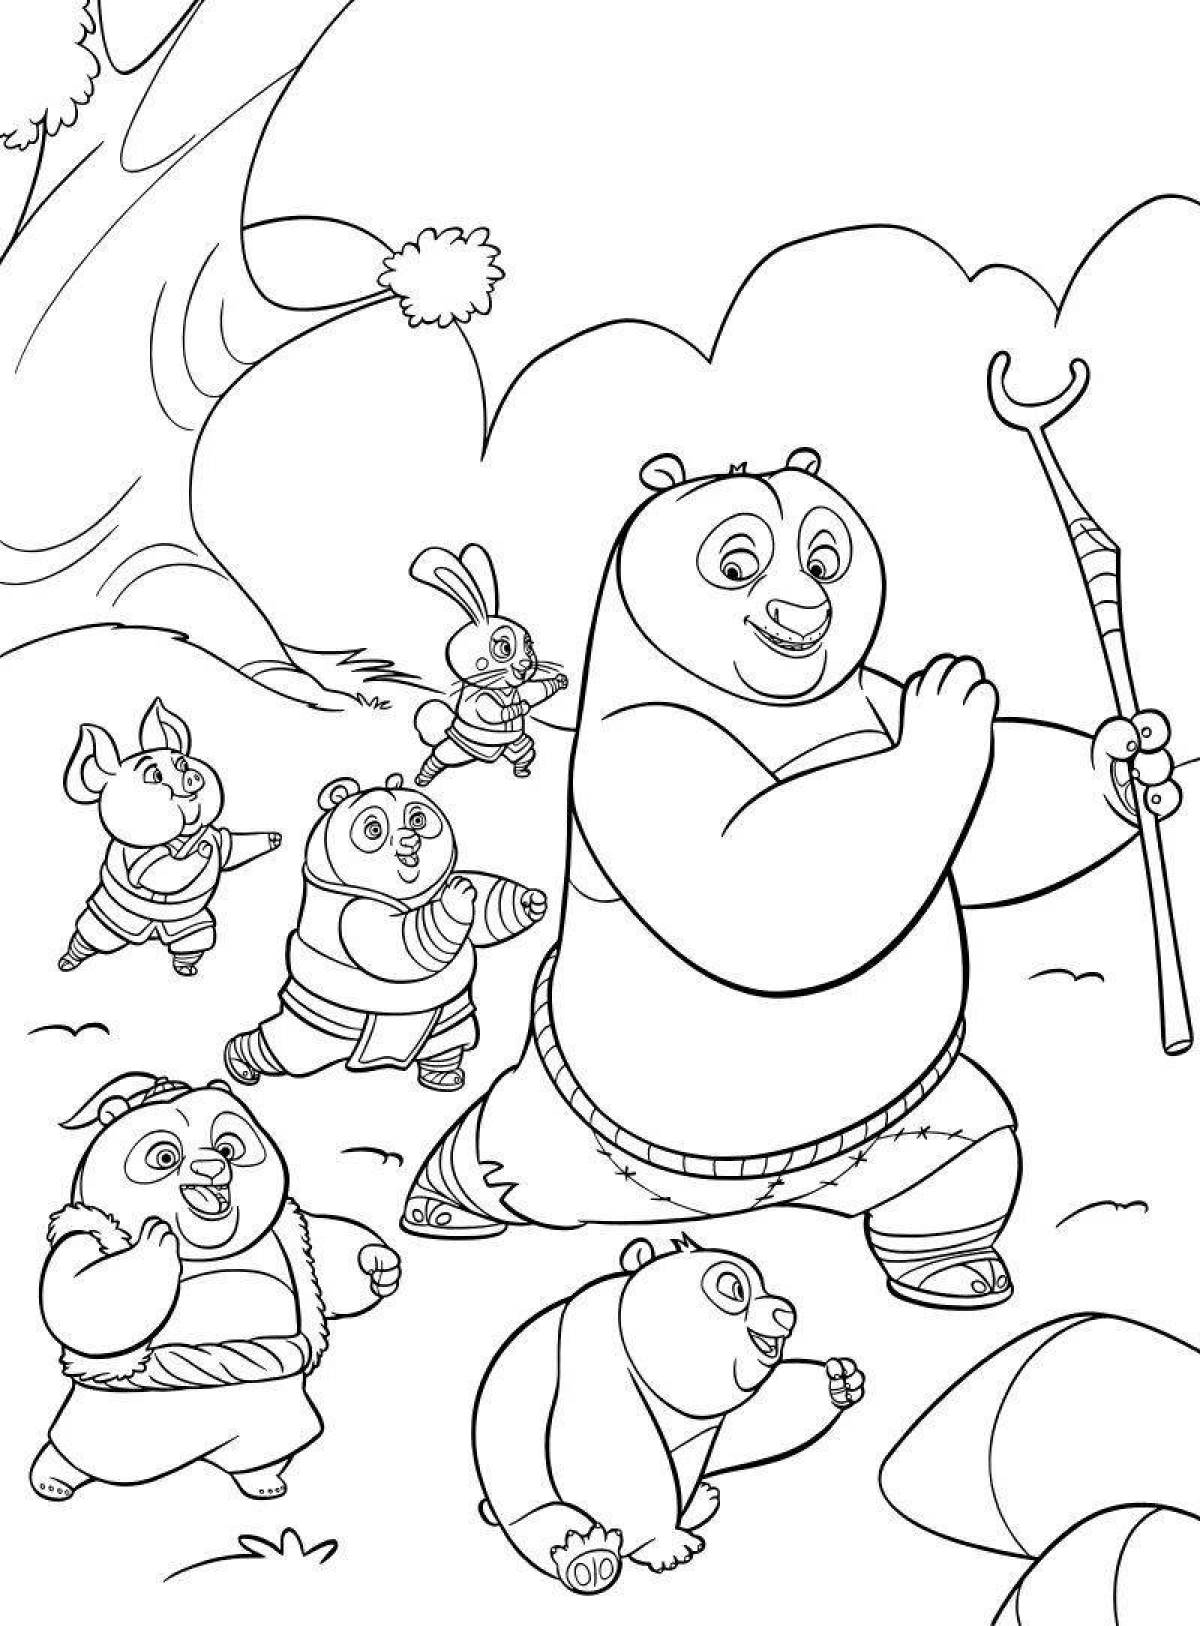 Coloring page bright panda fu panda